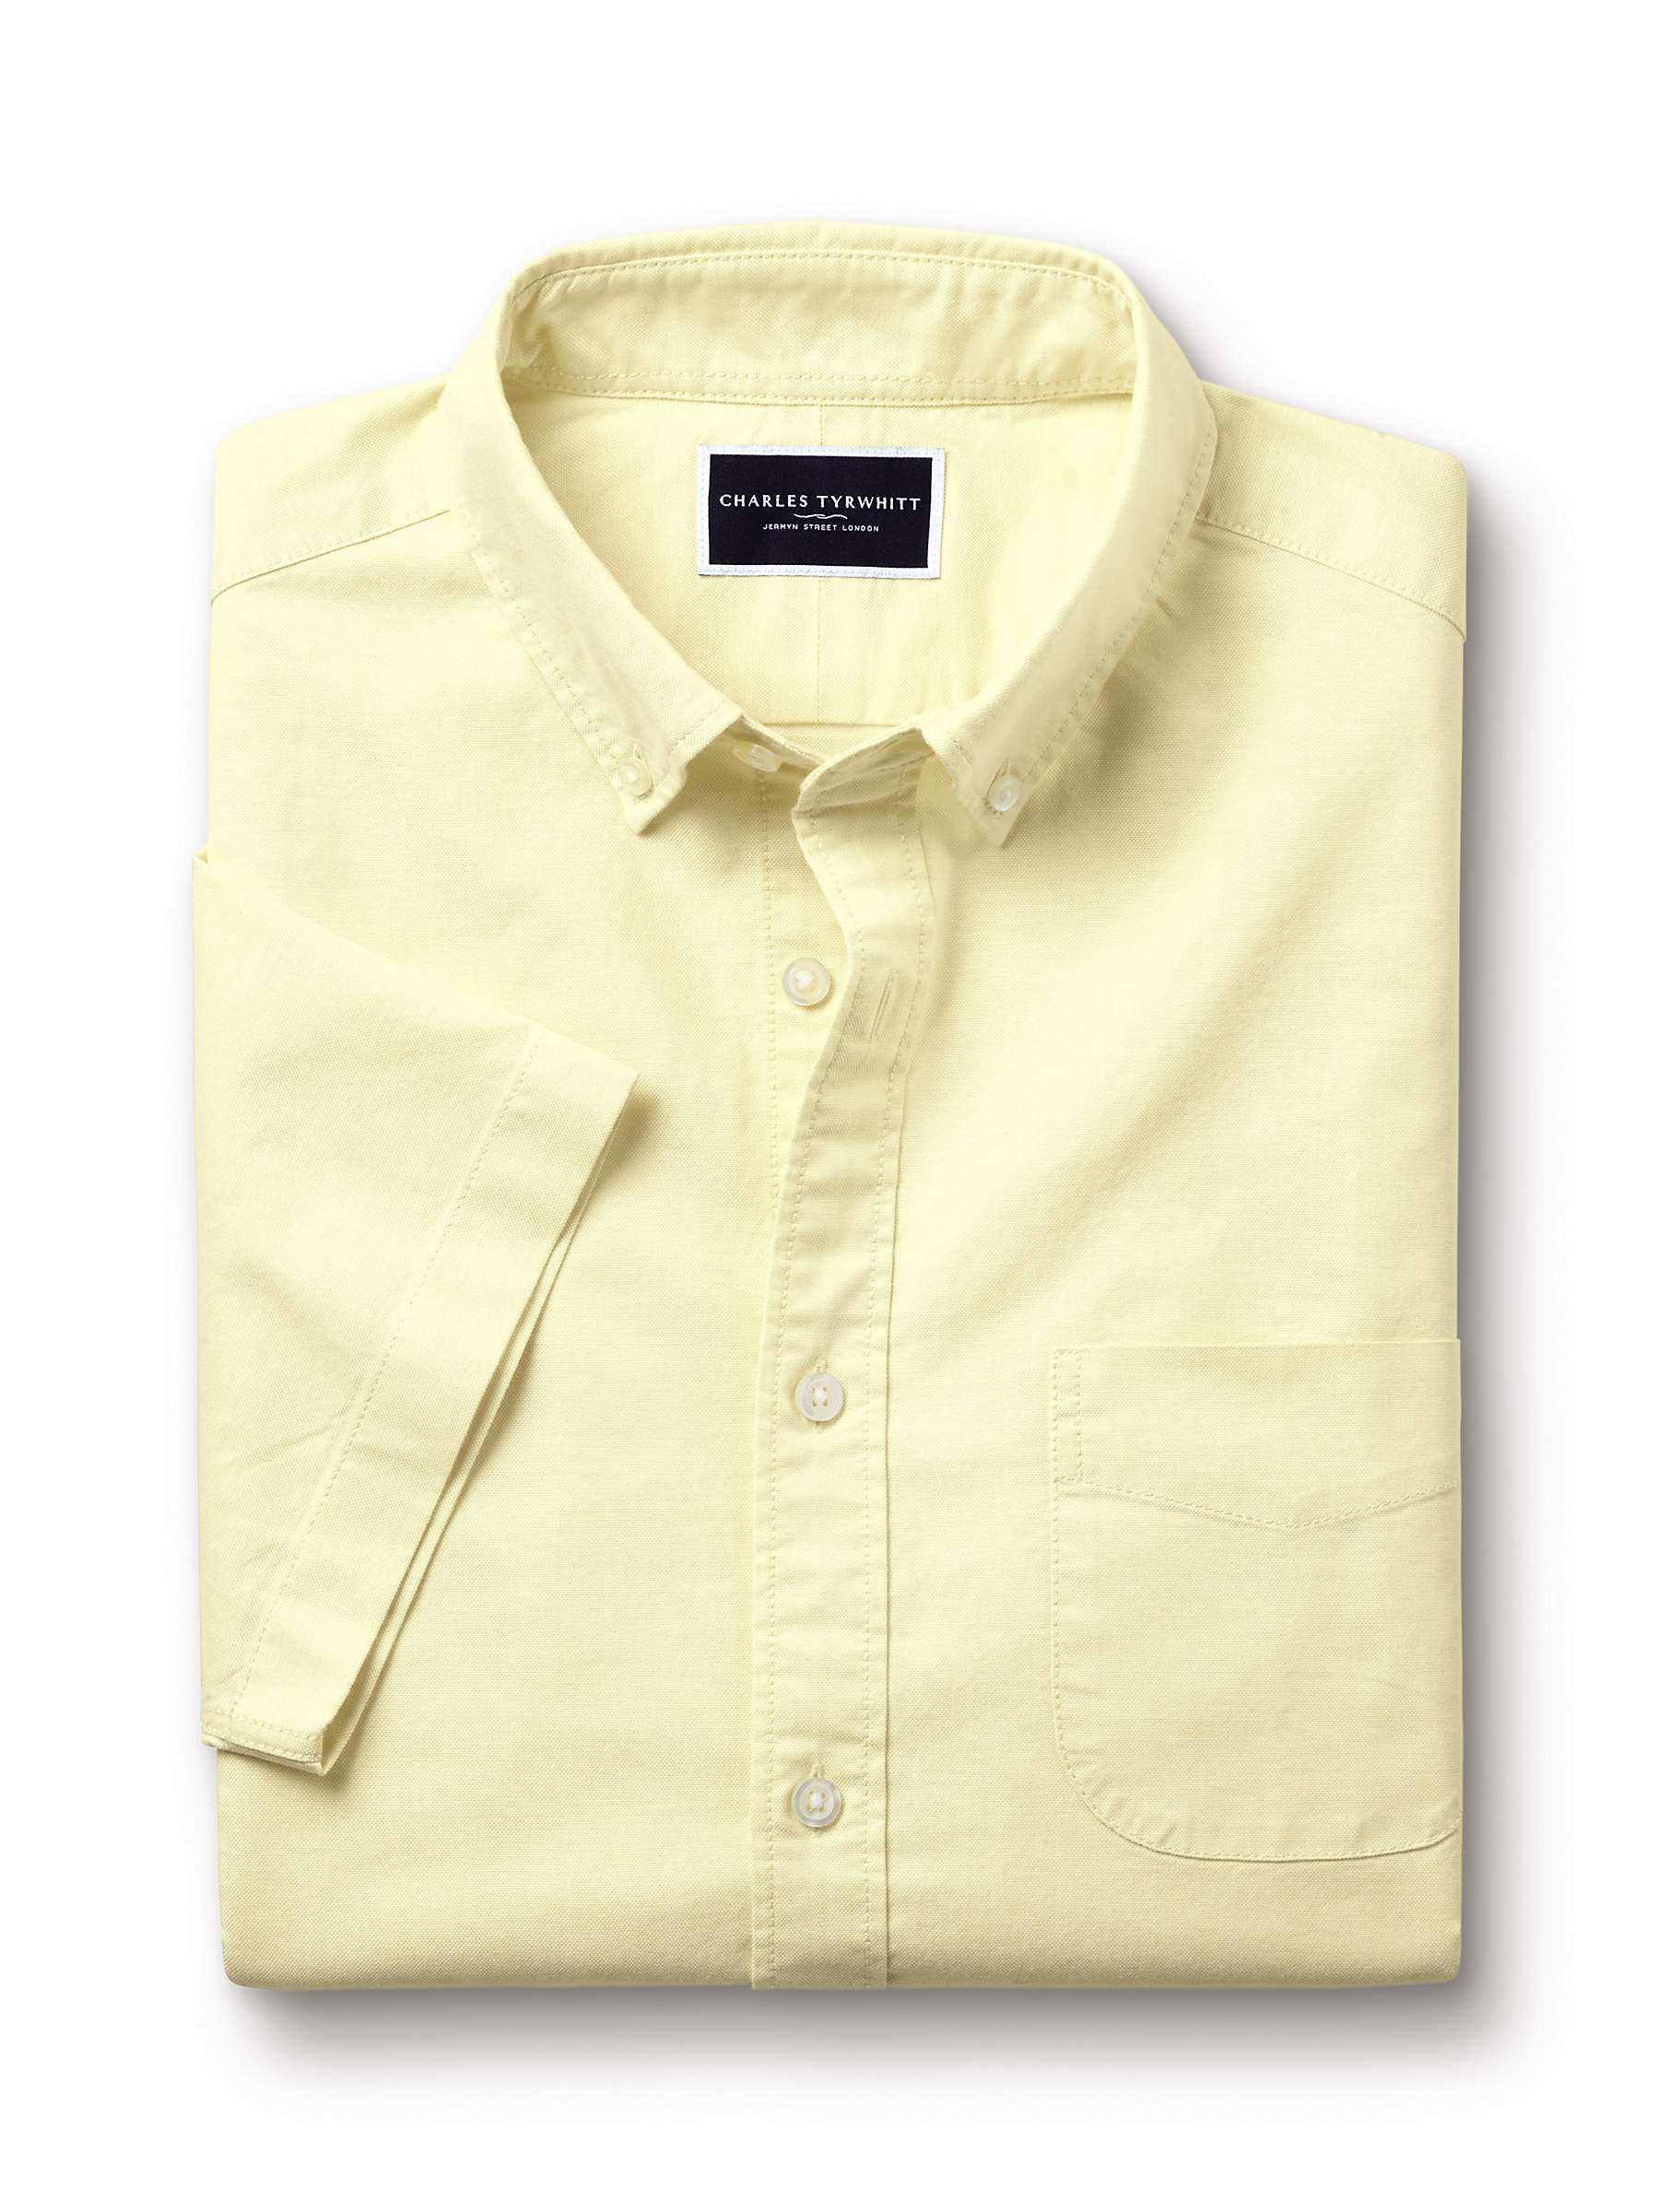 Buy Charles Tyrwhitt Slim Fit Short Sleeve Oxford Shirt Online at johnlewis.com